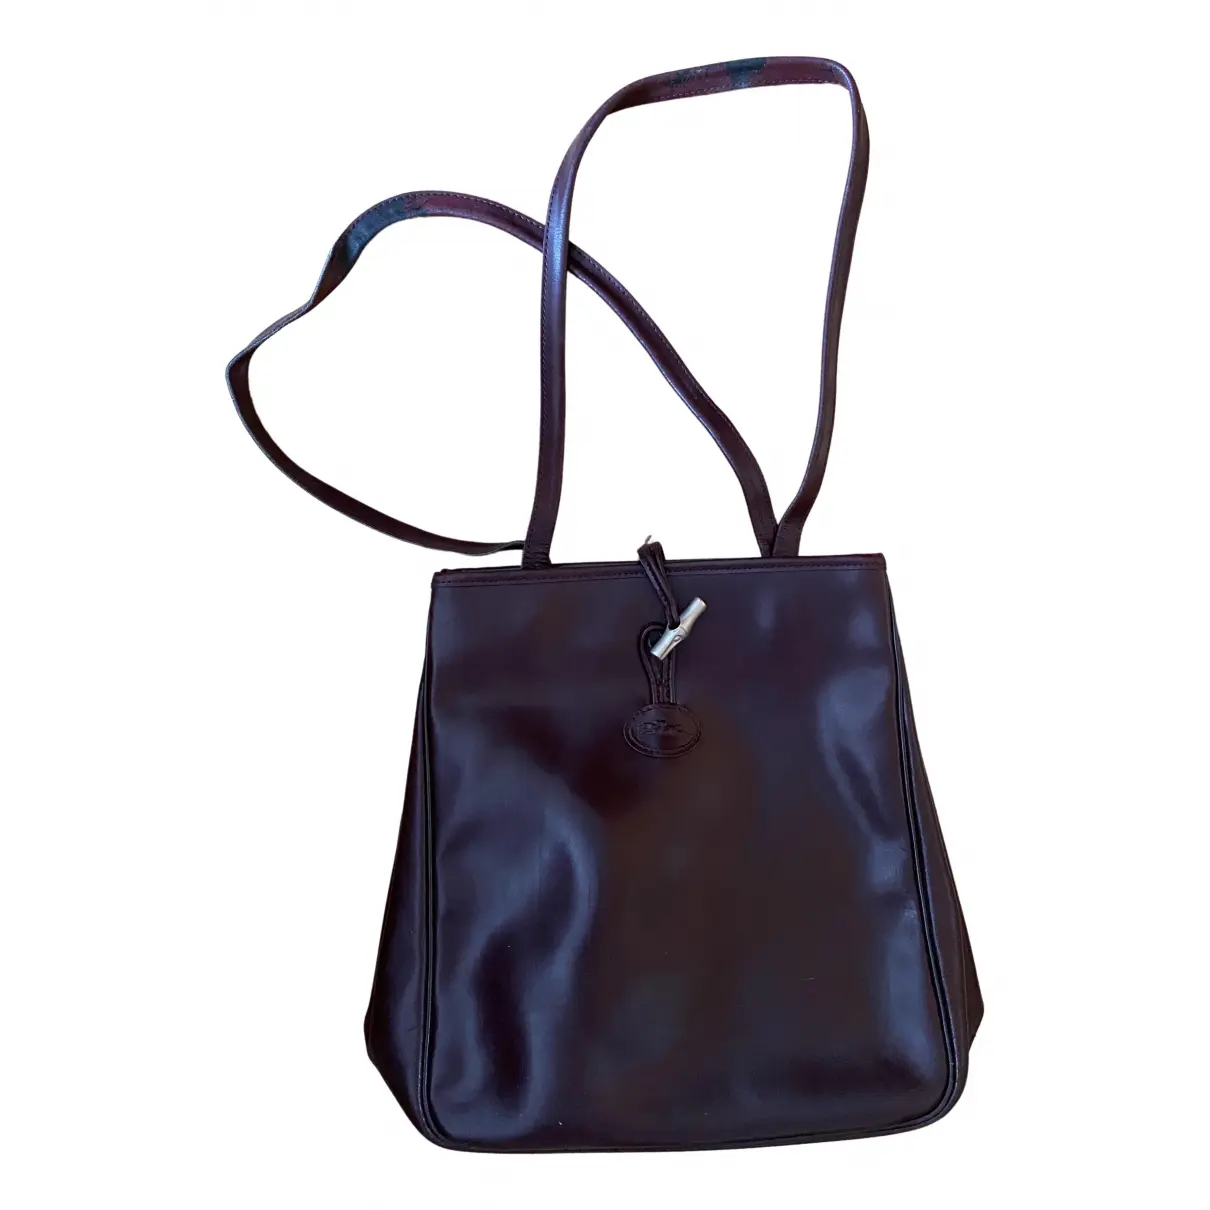 Roseau leather handbag Longchamp - Vintage